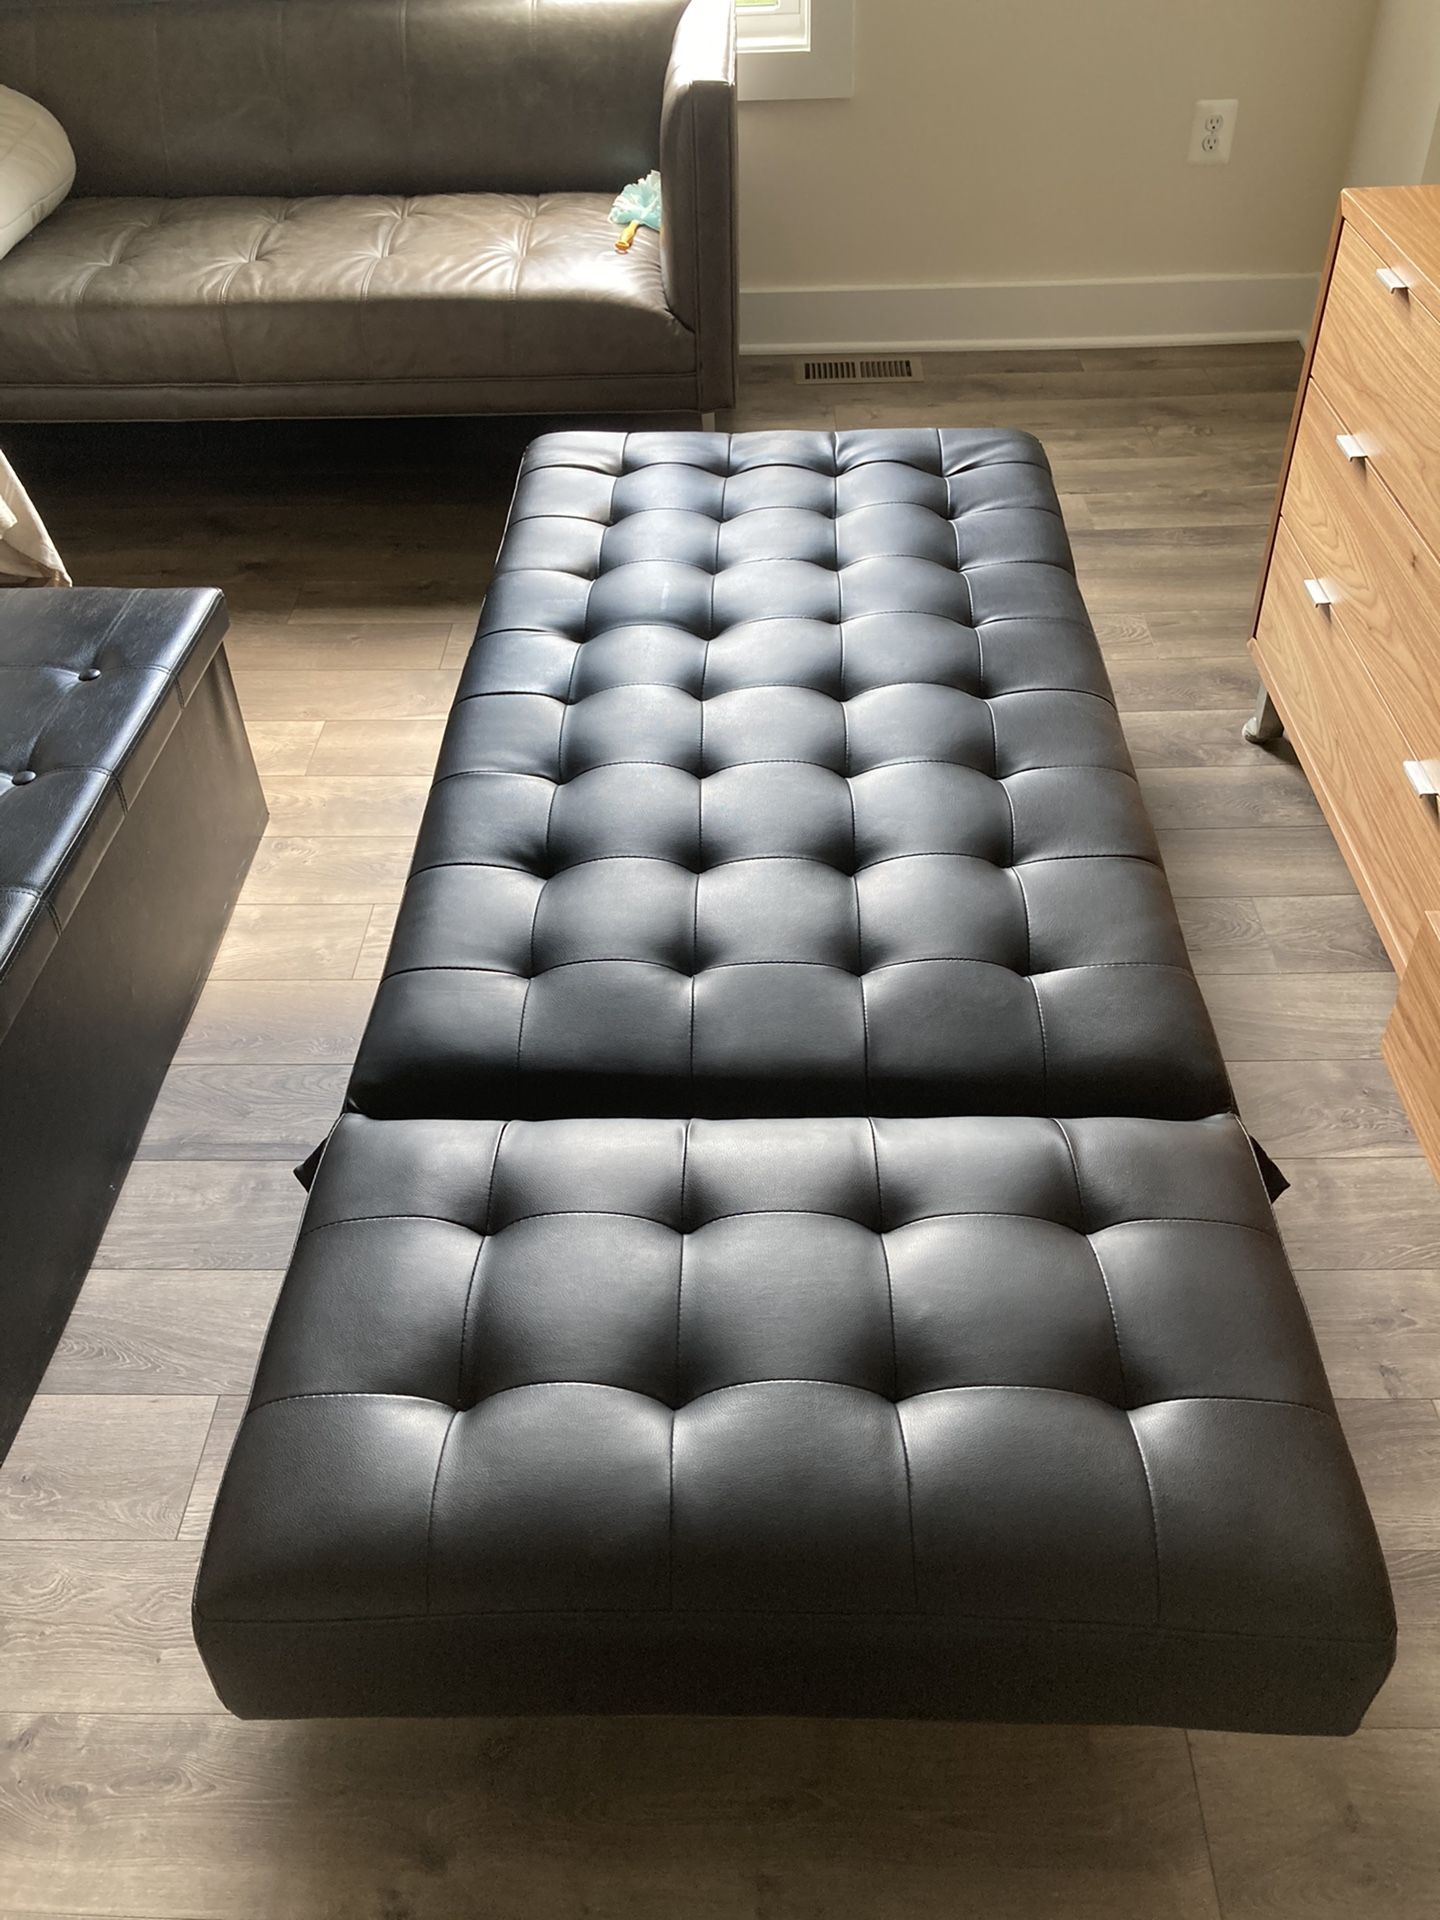 Leather sofa sleeper